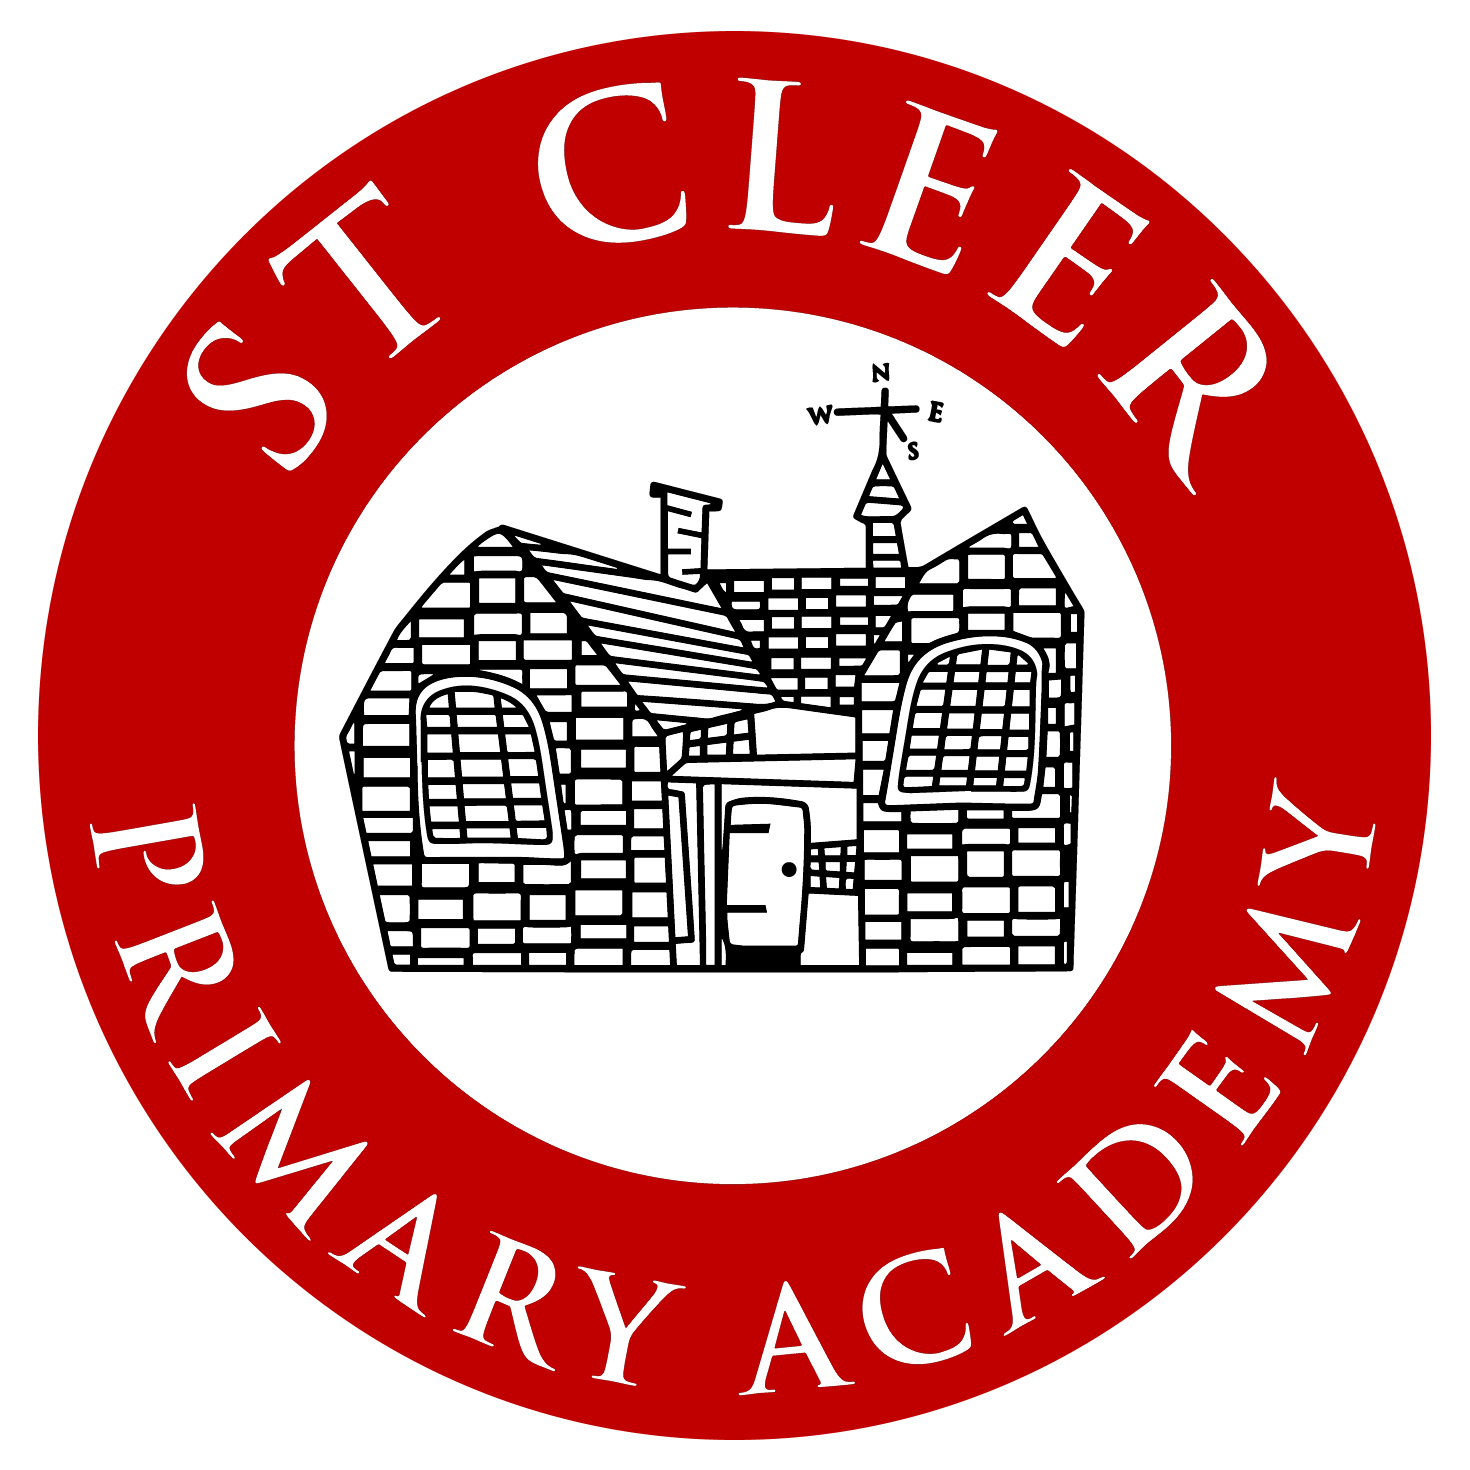 St Cleer Primary Academy logo